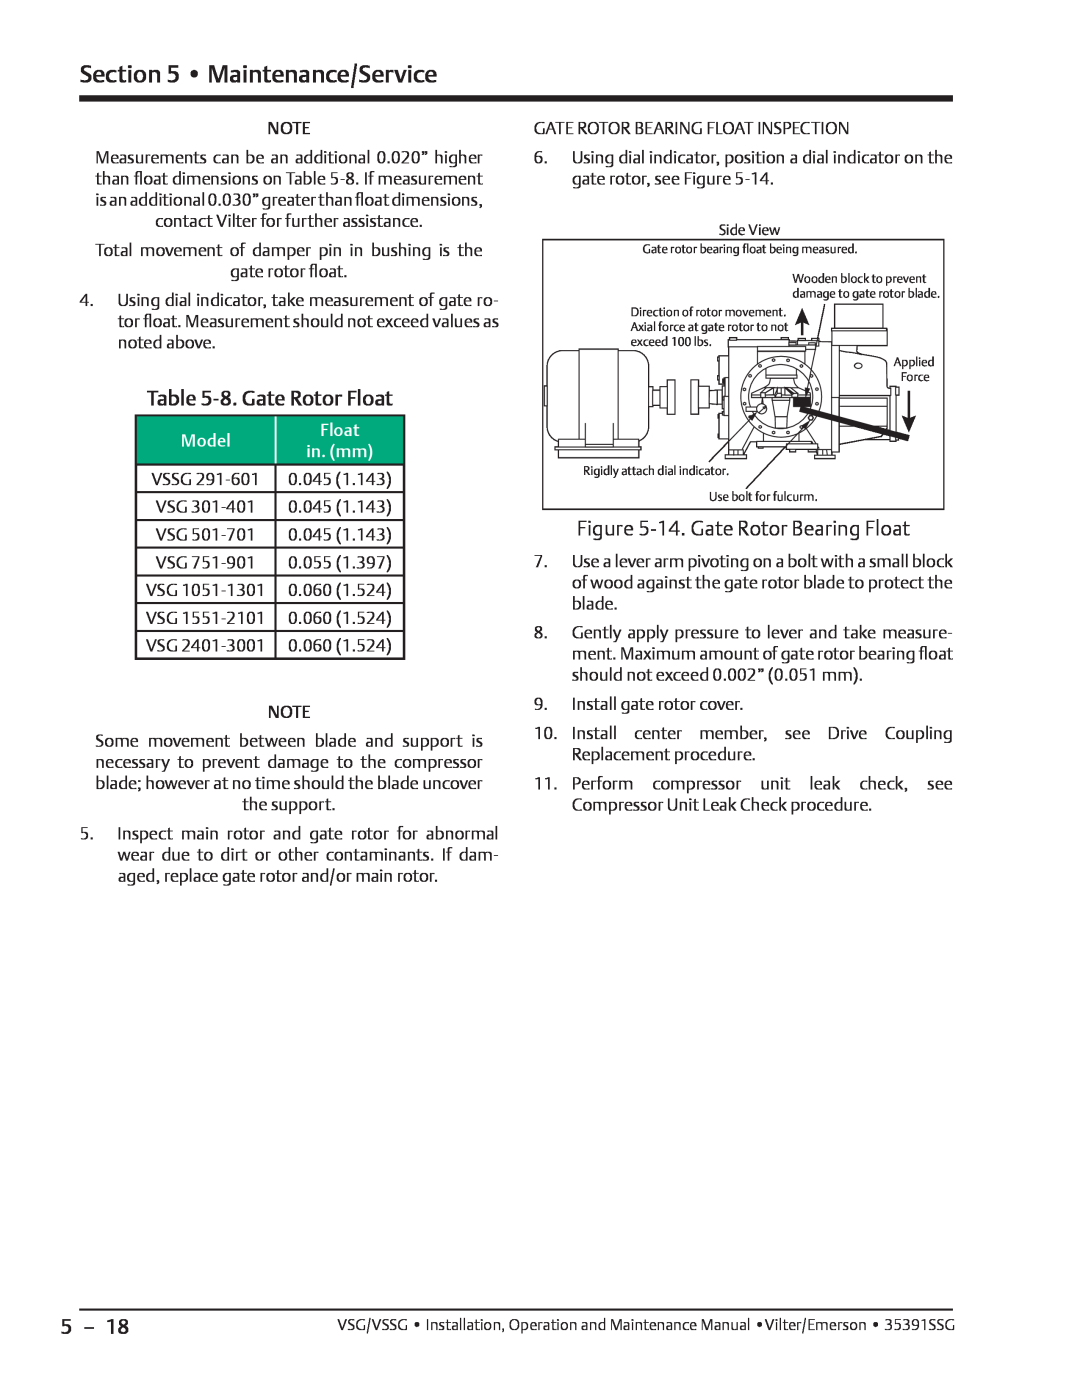 Emerson VSSG, VSG manual 8. Gate Rotor Float, 14. Gate Rotor Bearing Float, Maintenance/Service, Direction of rotor movement 